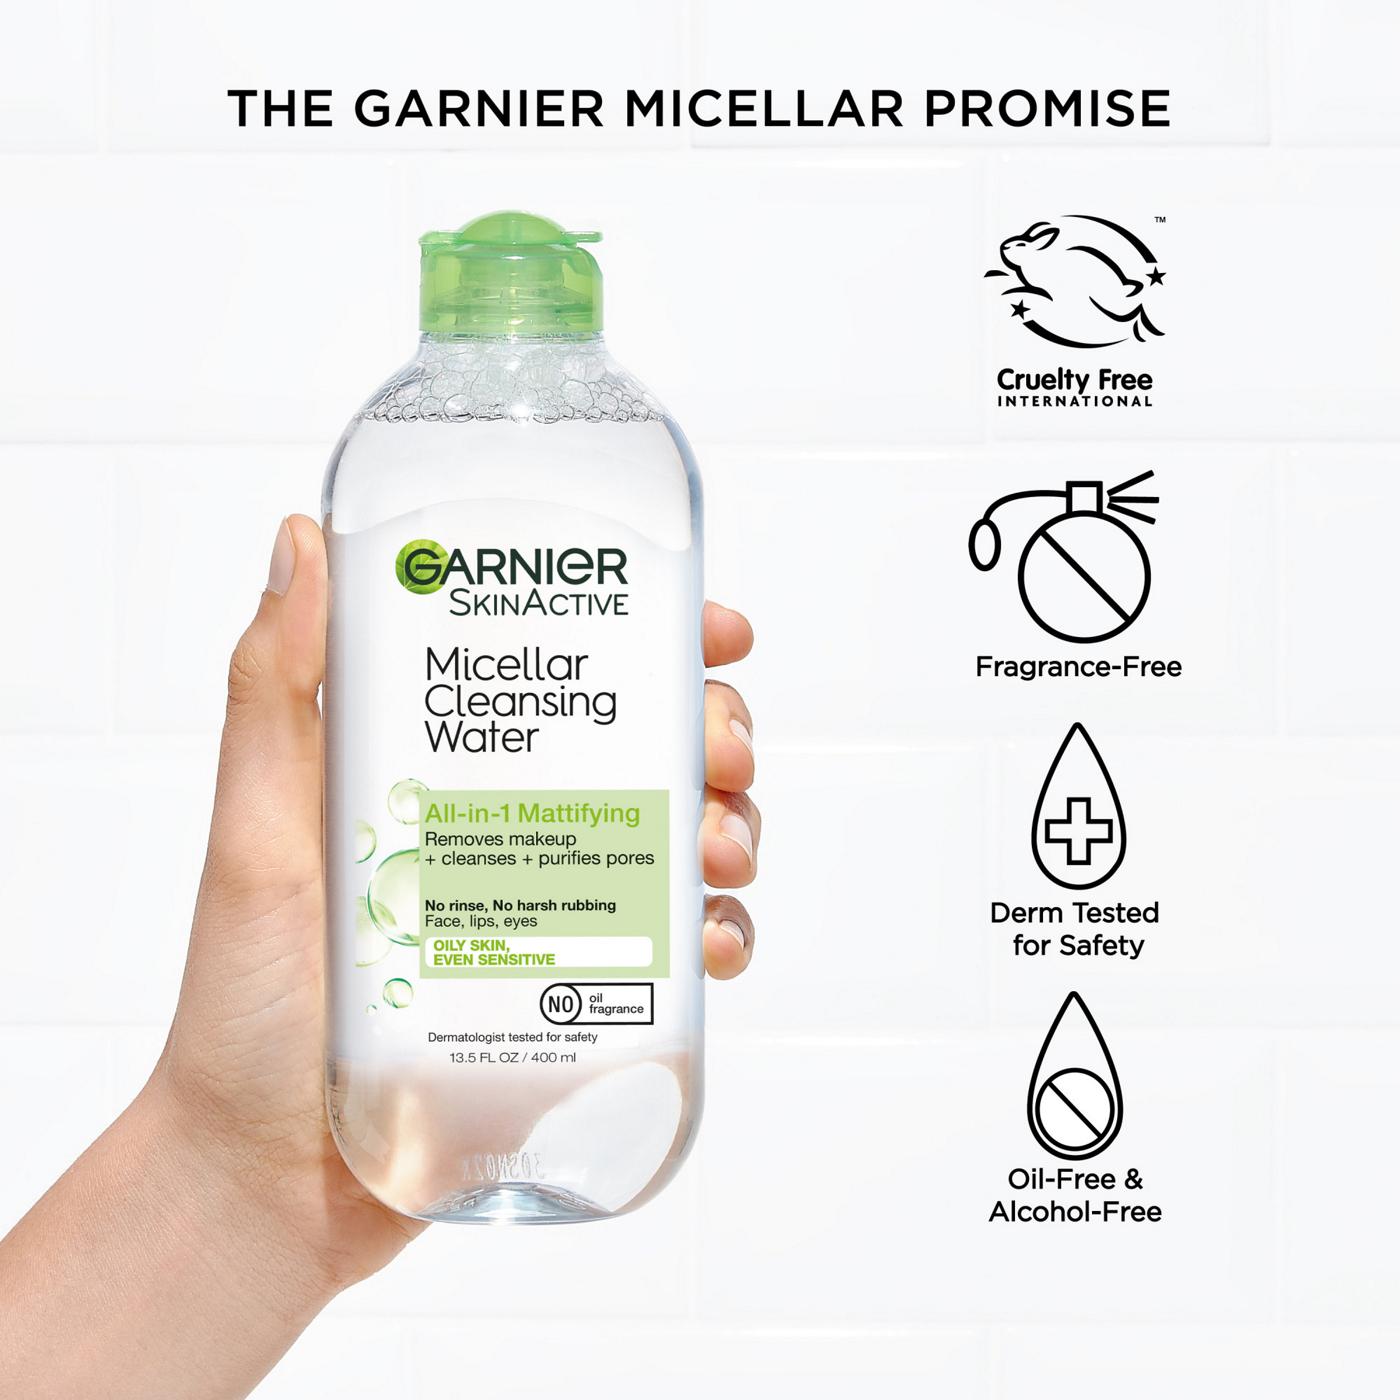 Garnier SkinActive Micellar Cleansing Water, For Oily Skin; image 6 of 8